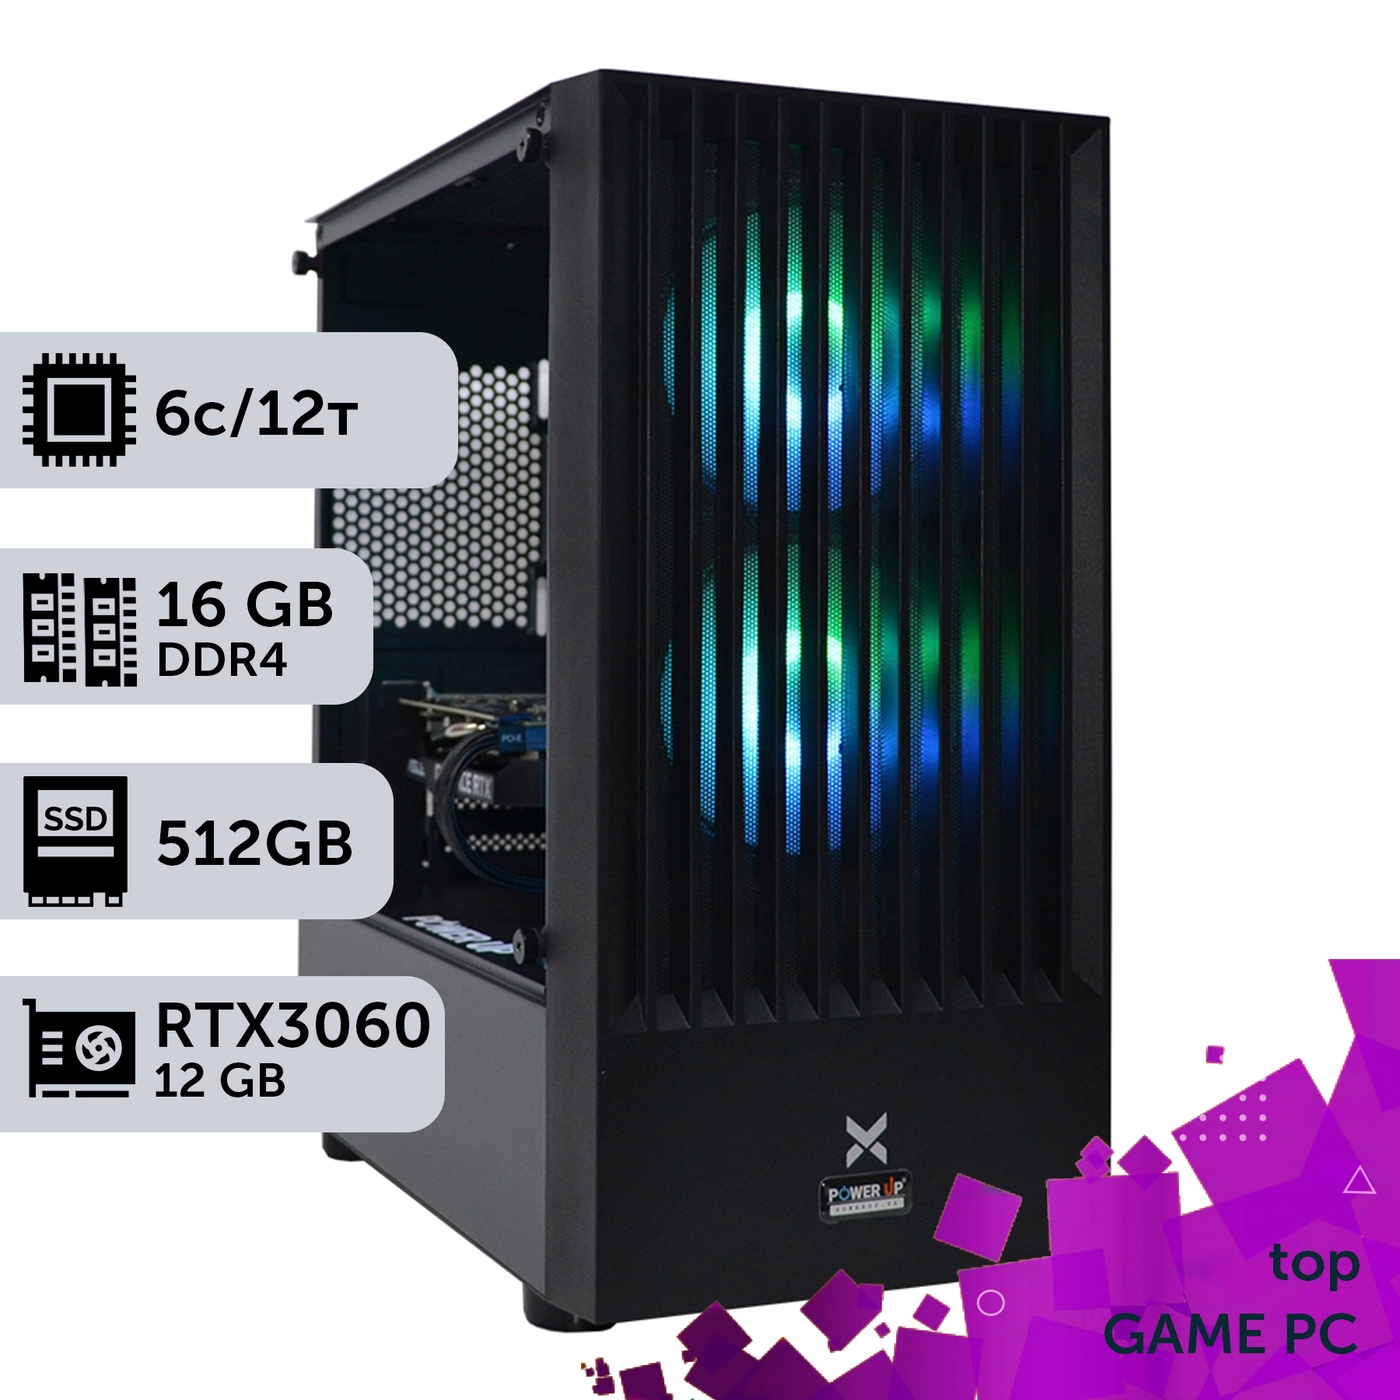 Игровой компьютер GamePC TOP #205 Core i5 12400F/16 GB/SSD 512GB/GeForce RTX 3060 12GB